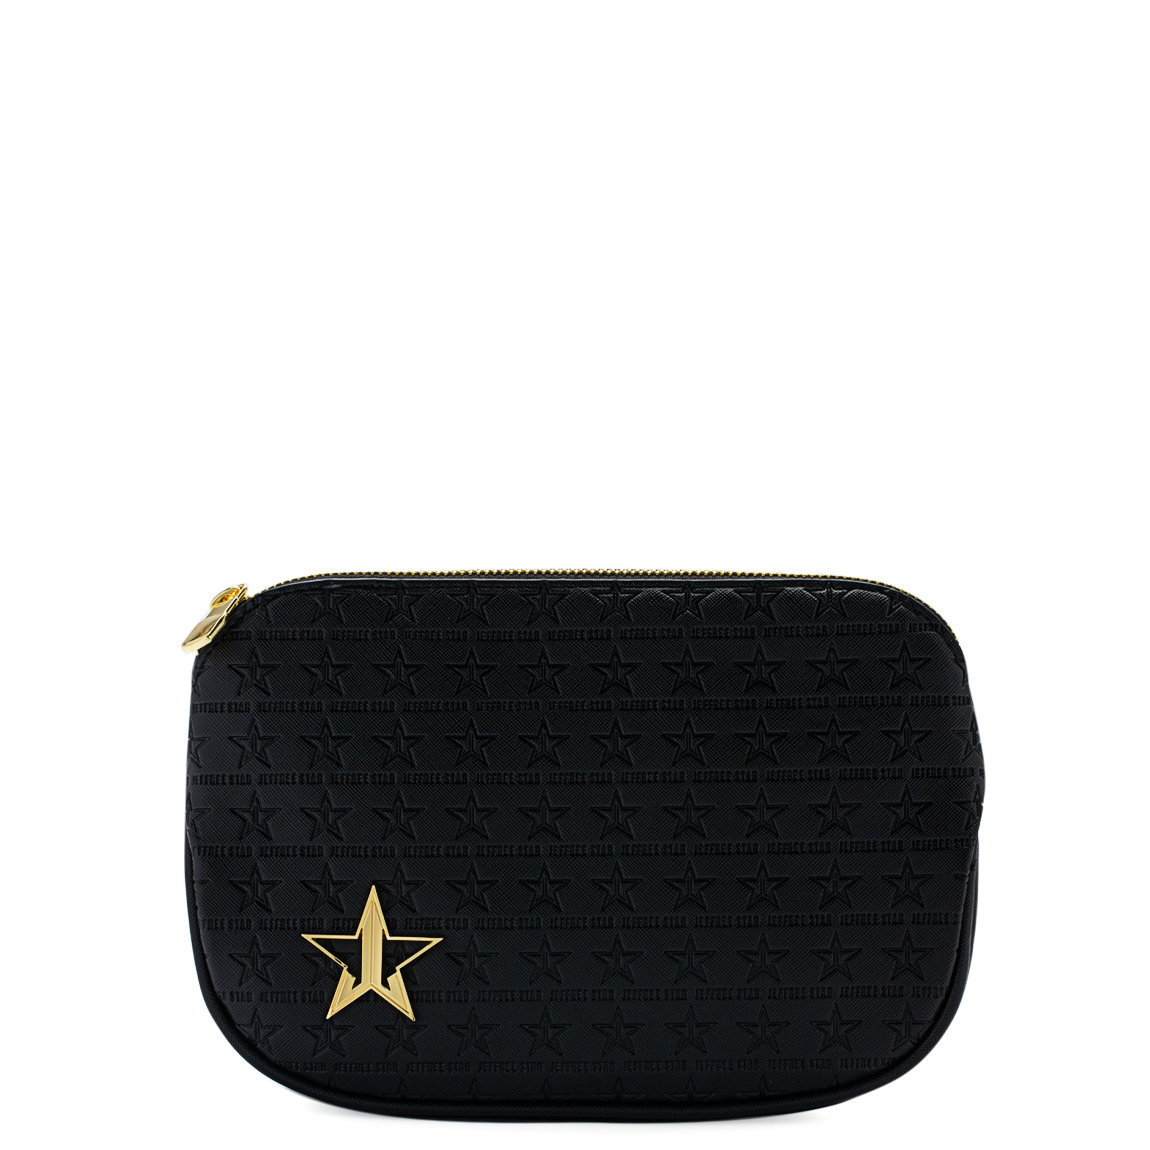 Jeffree Star Cosmetics Cross Body Bag Black | Beautylish